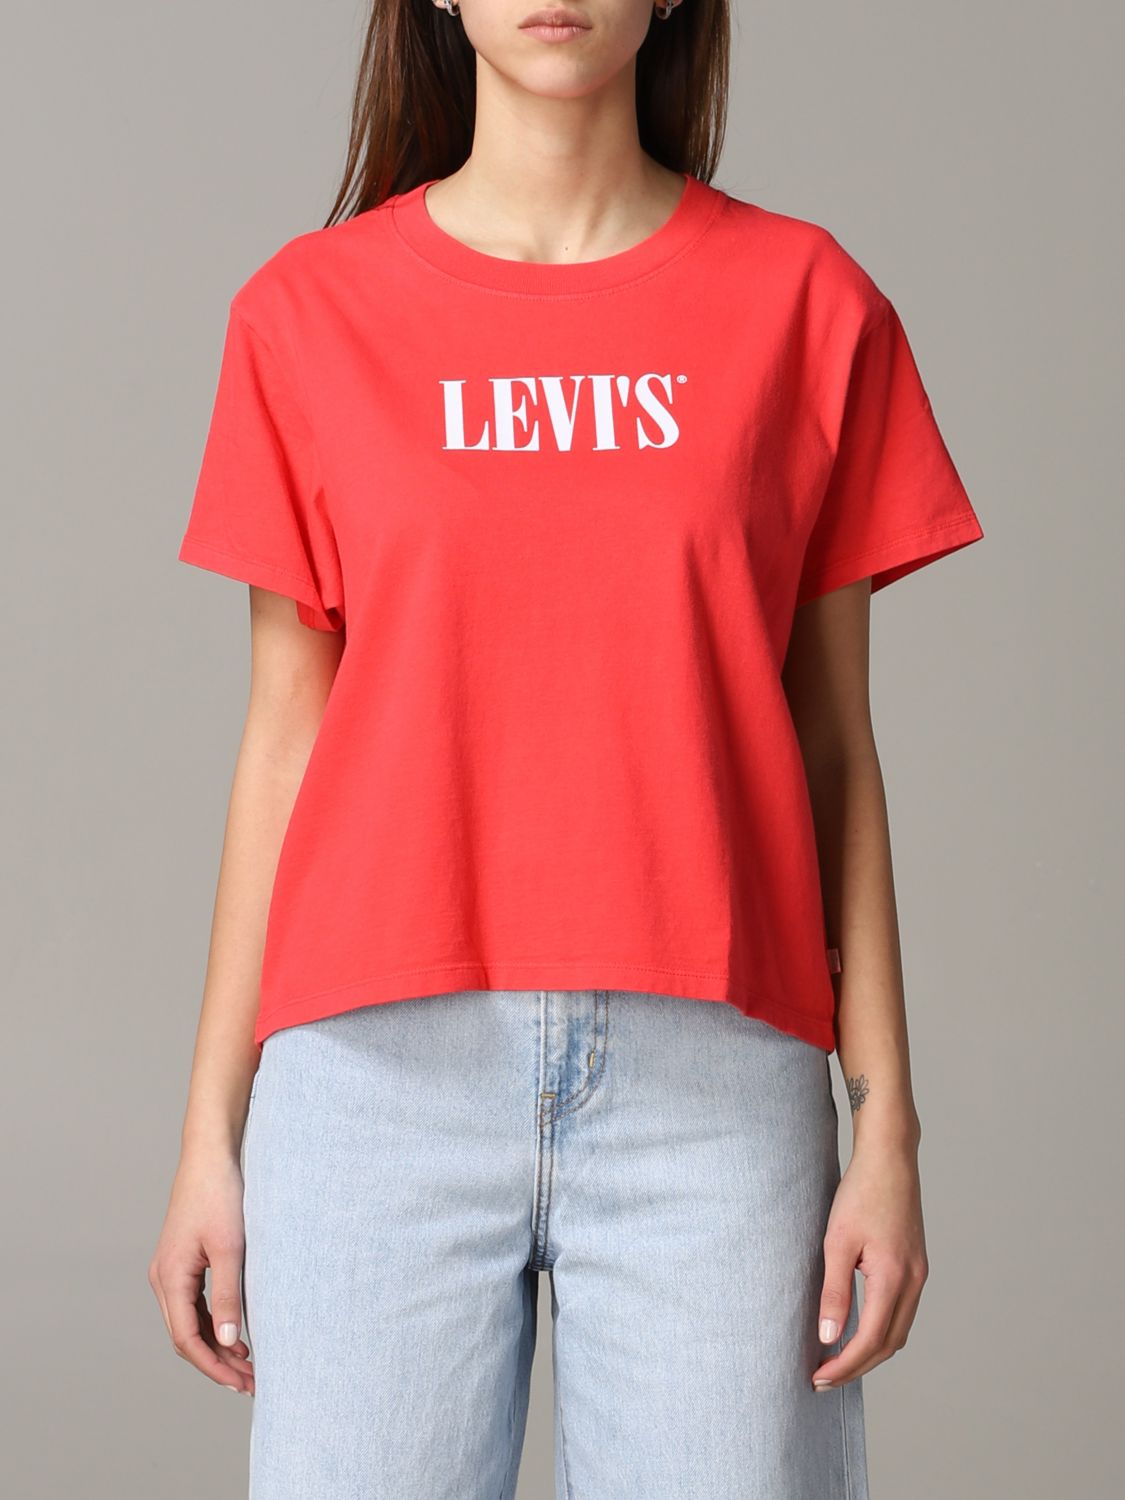 womens red levi t shirt